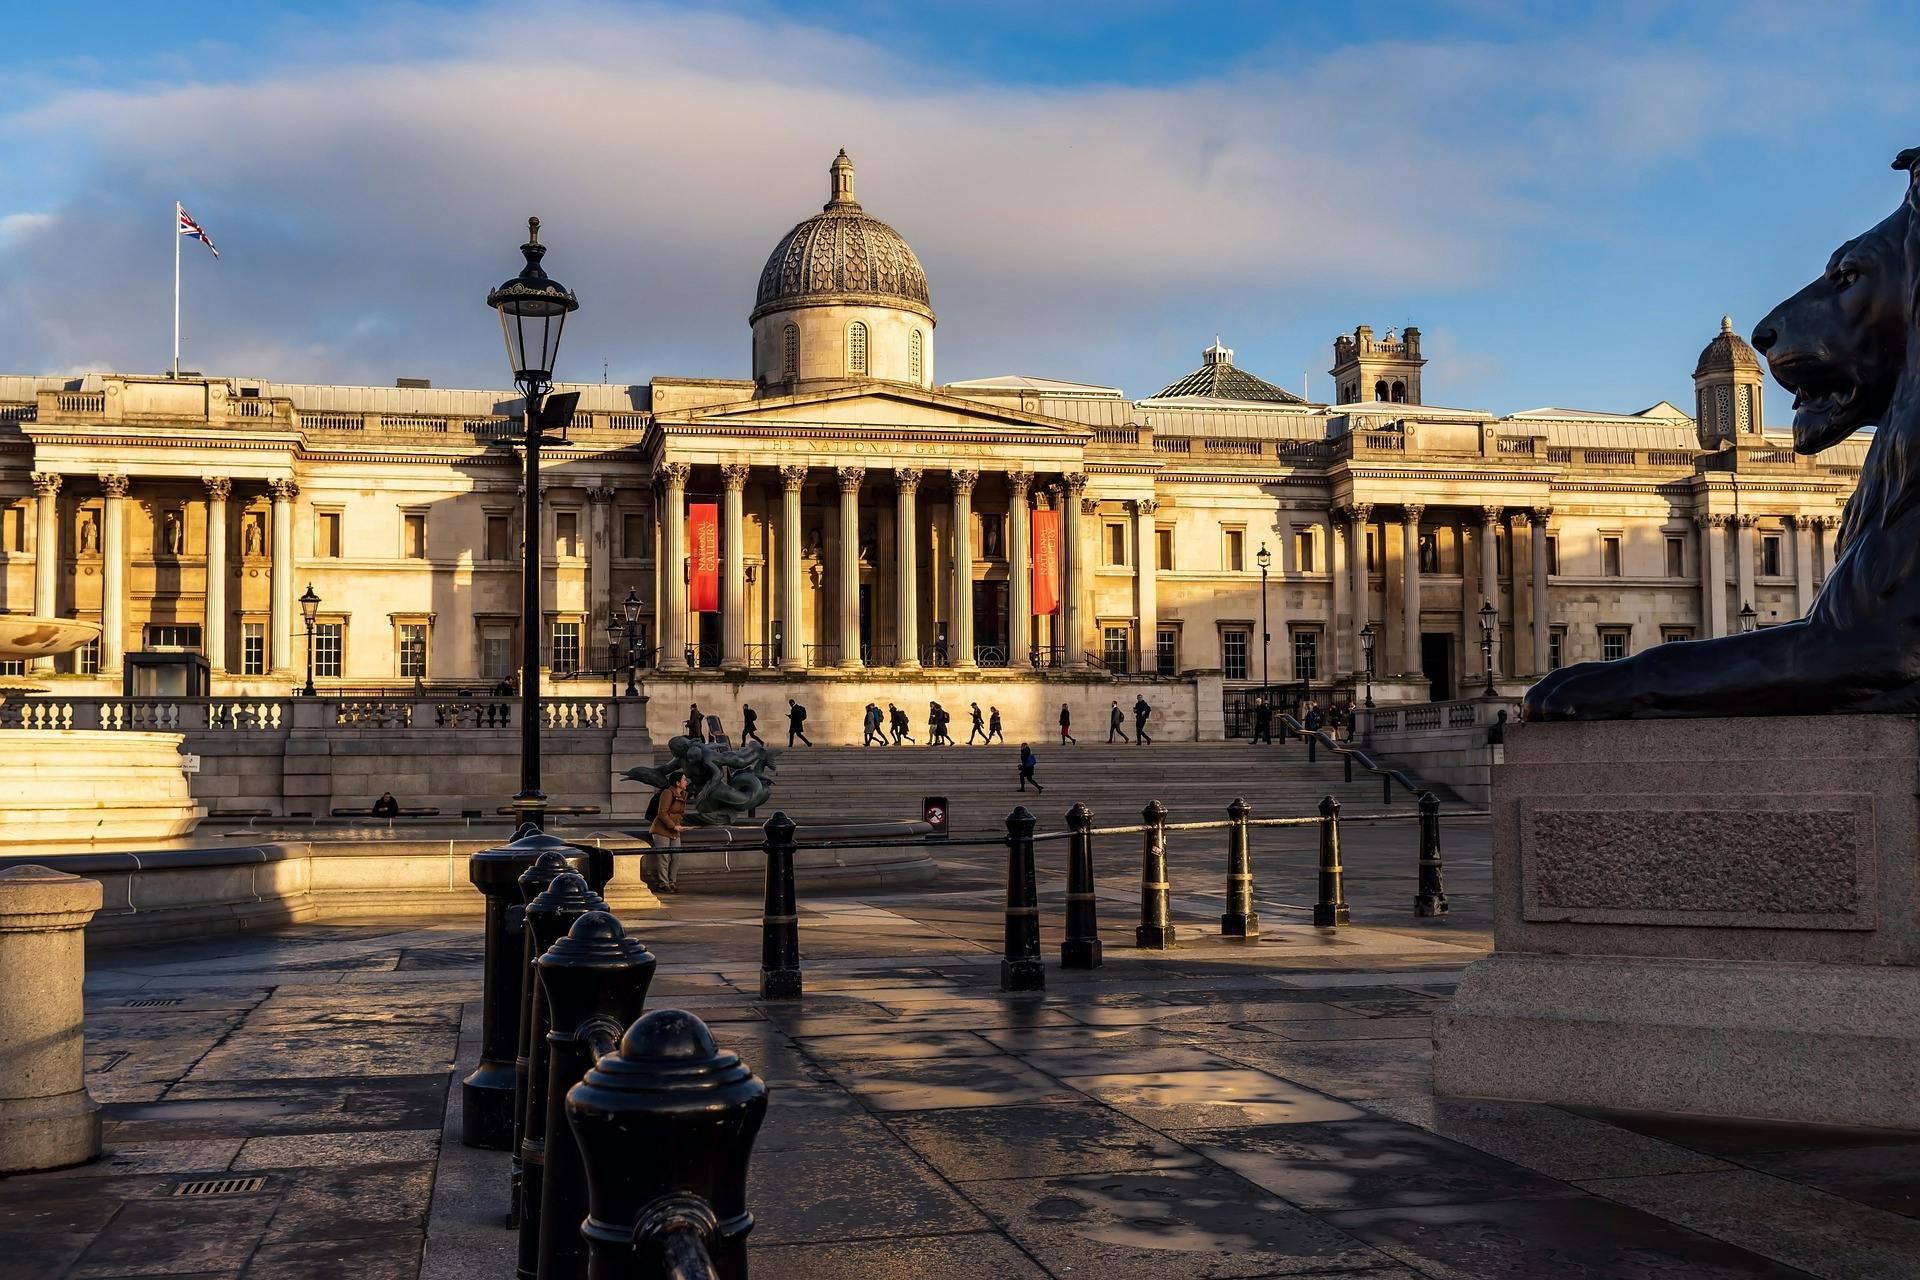 Zelfgeleide moordmysterie-ervaring op Trafalgar Square in Londen